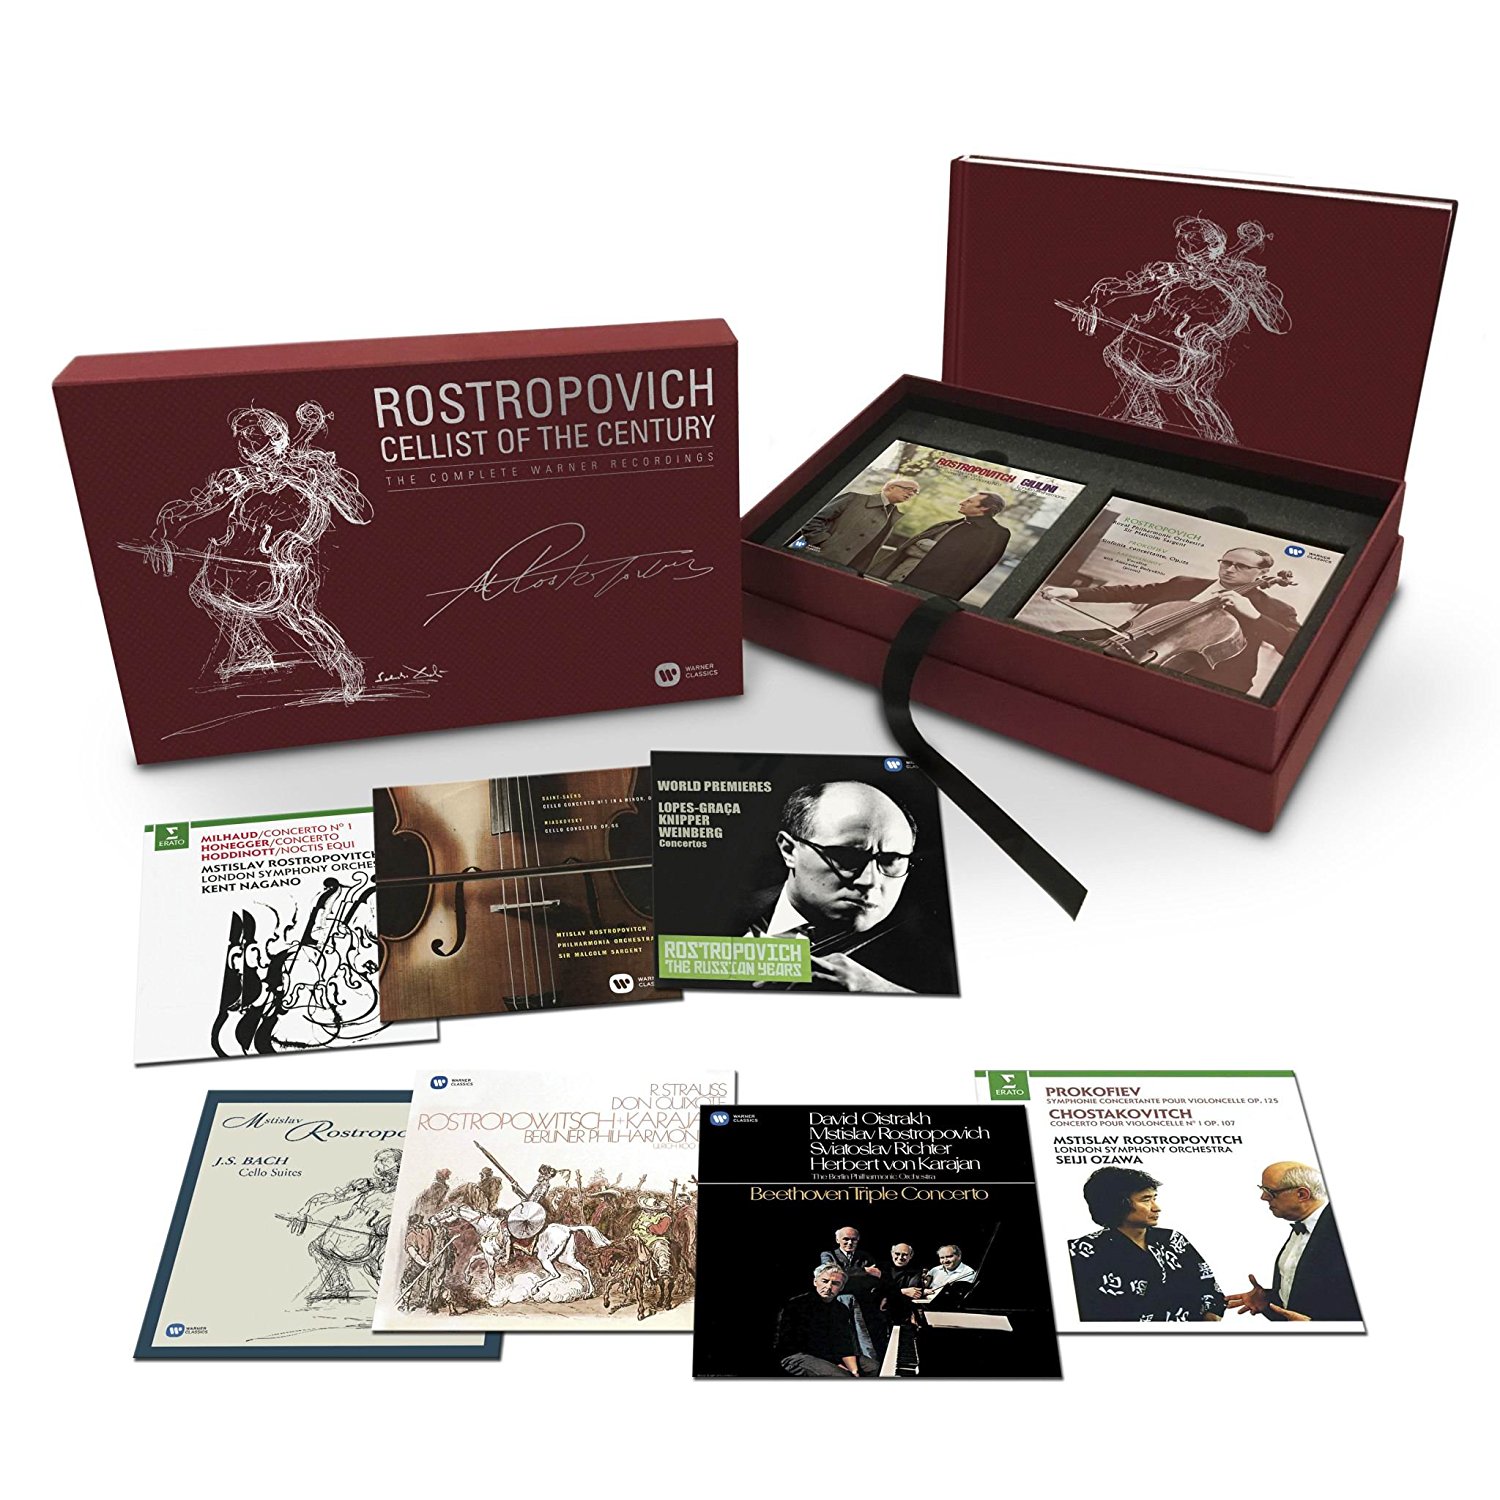 Rostropovich Cellist of the Century Warner Classic